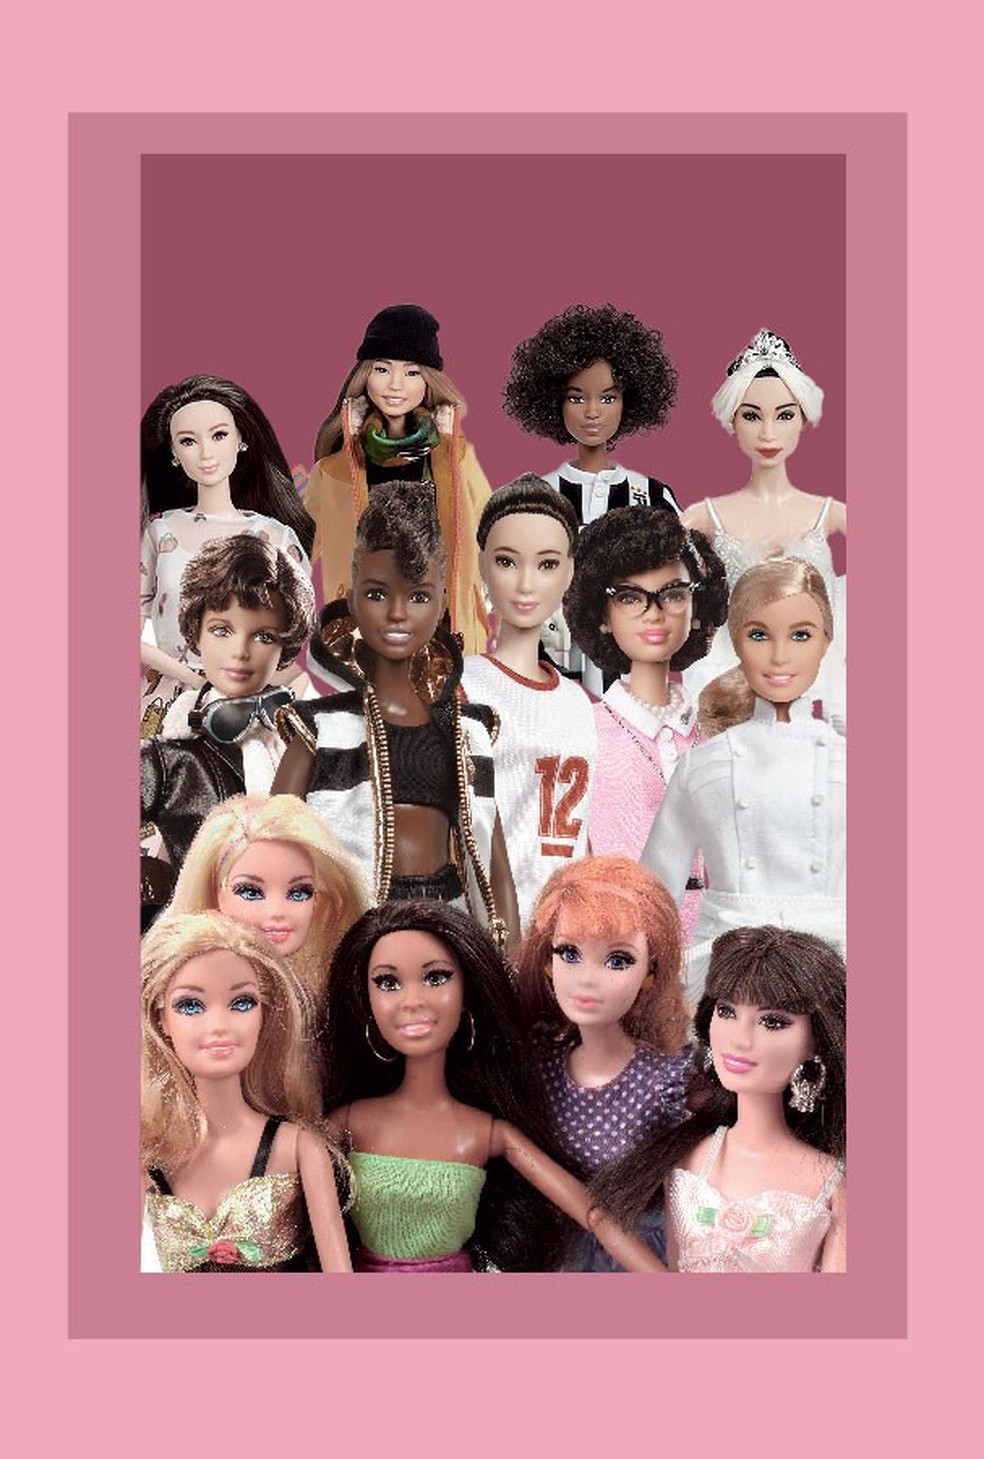 Boneca Barbie Mattel Casa Glam